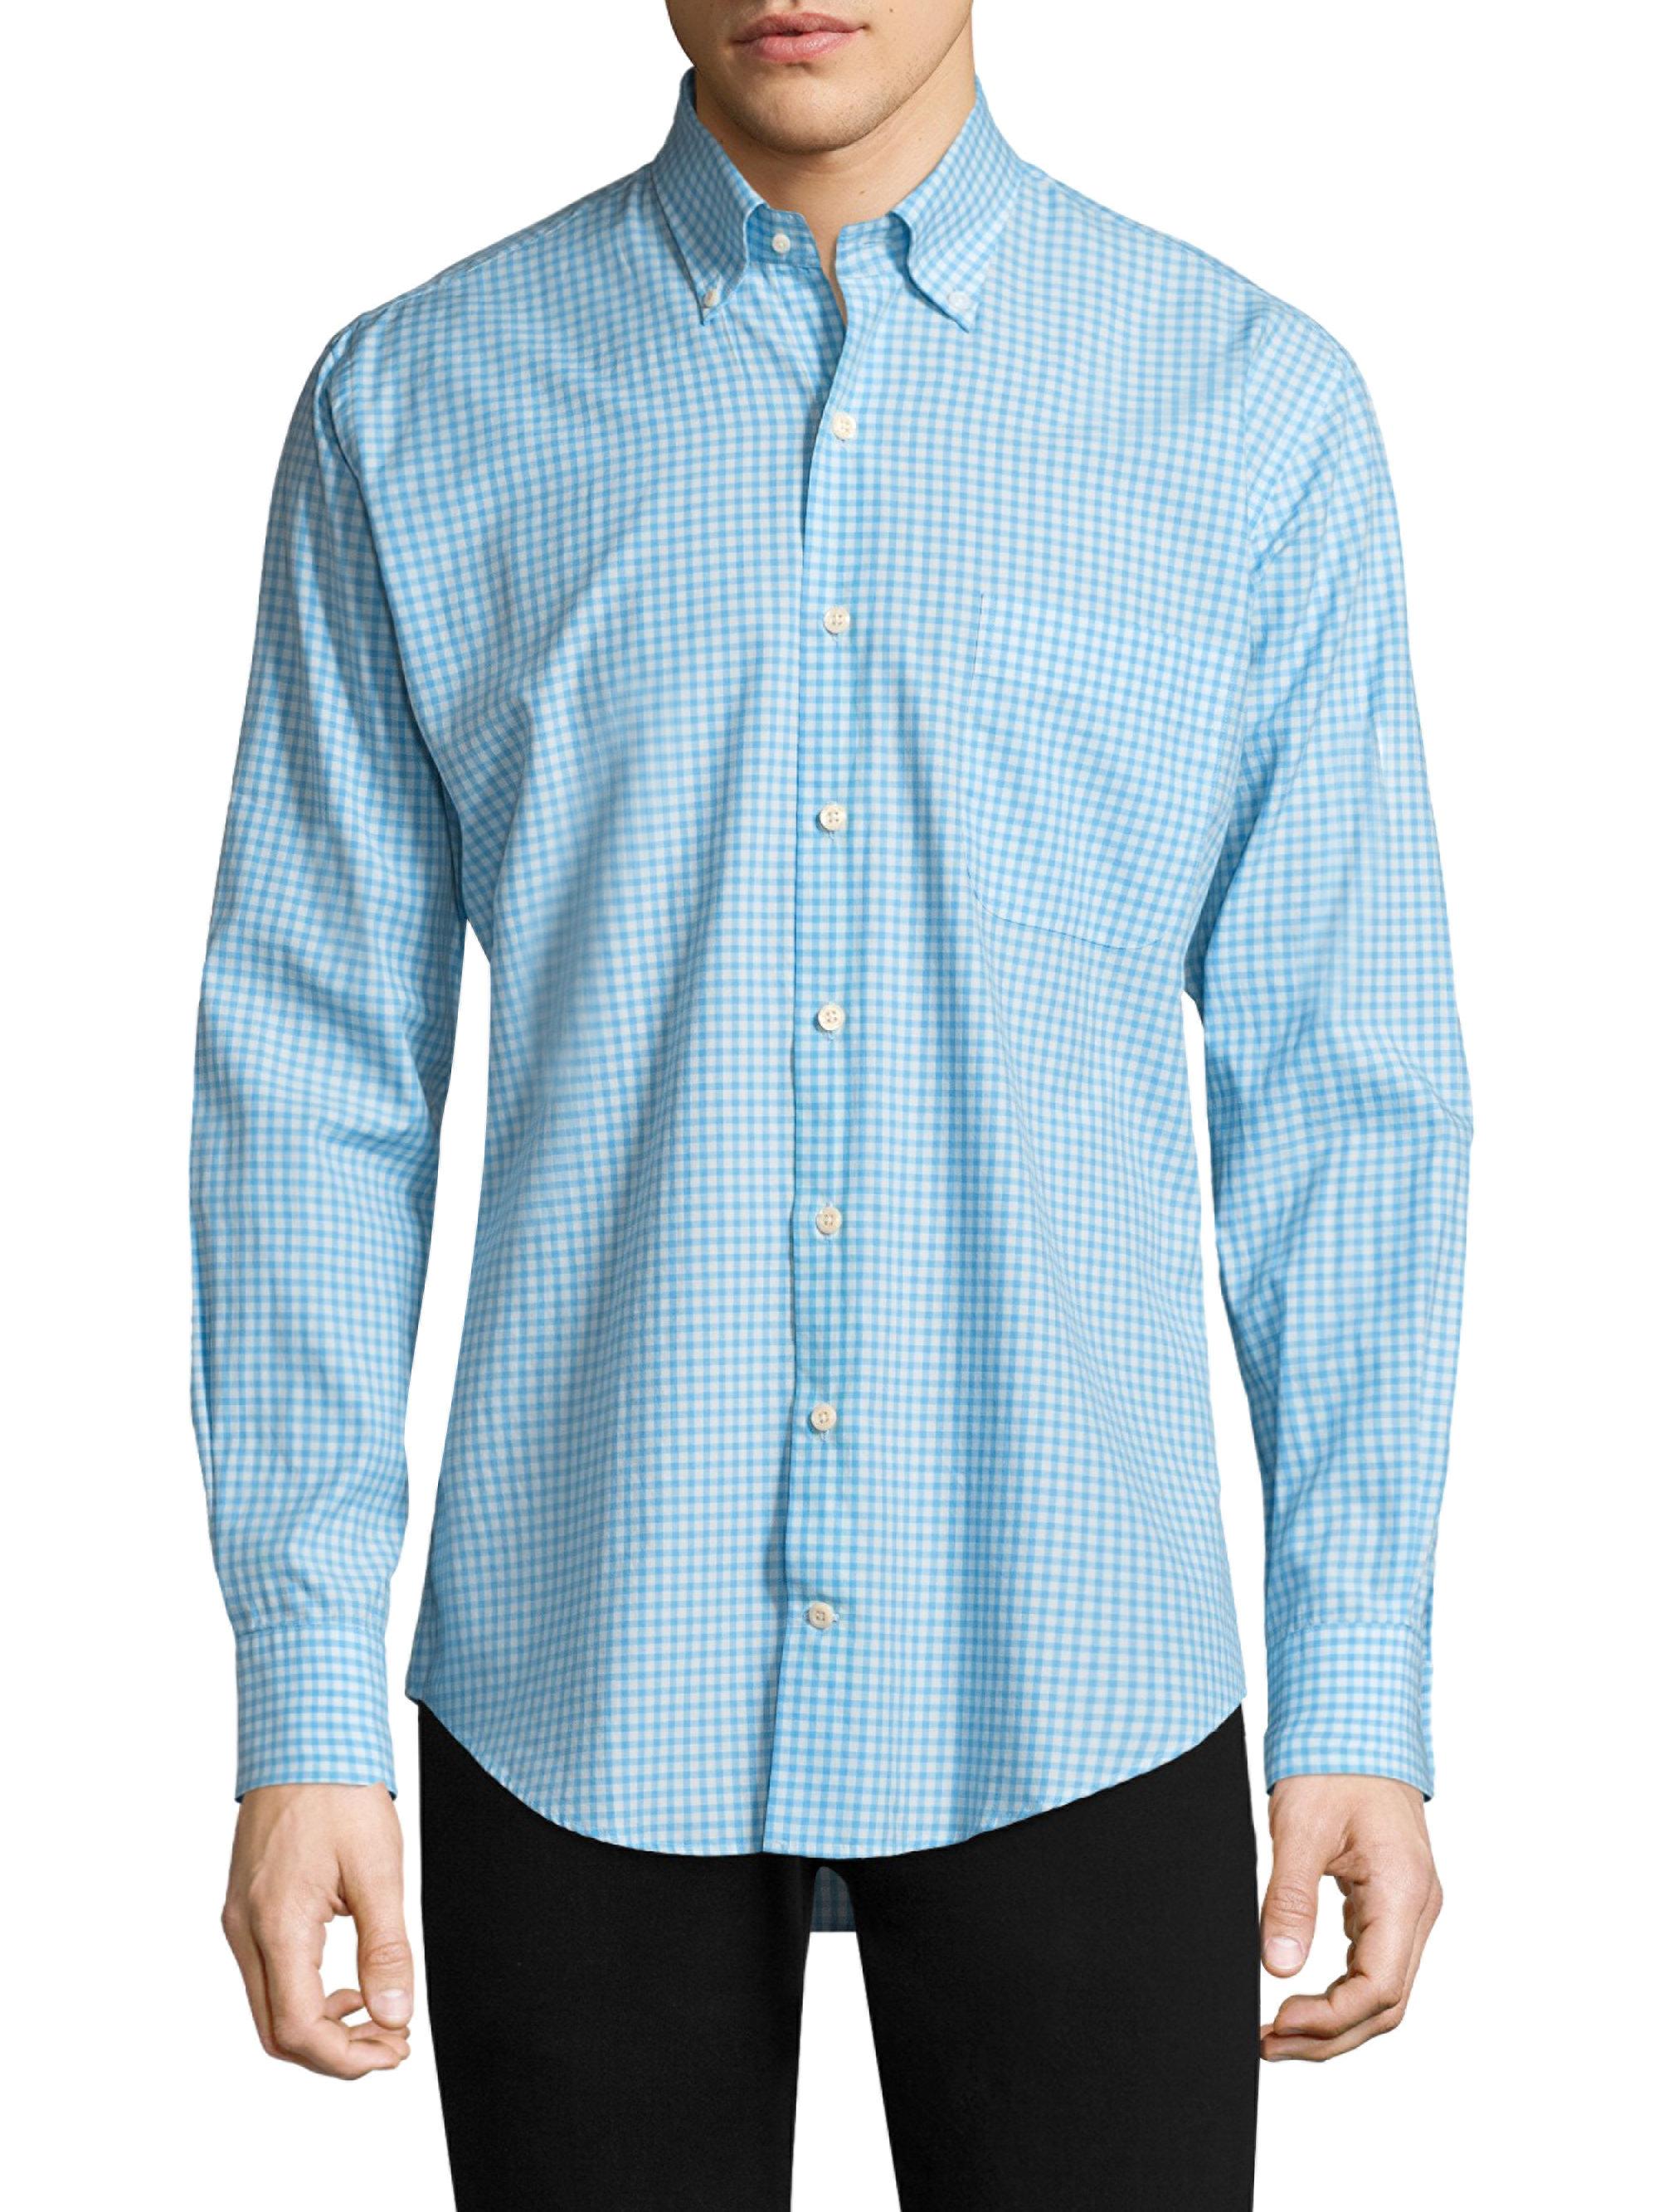 Lyst - Peter Millar Checkered Cotton Button-down Shirt in Blue for Men